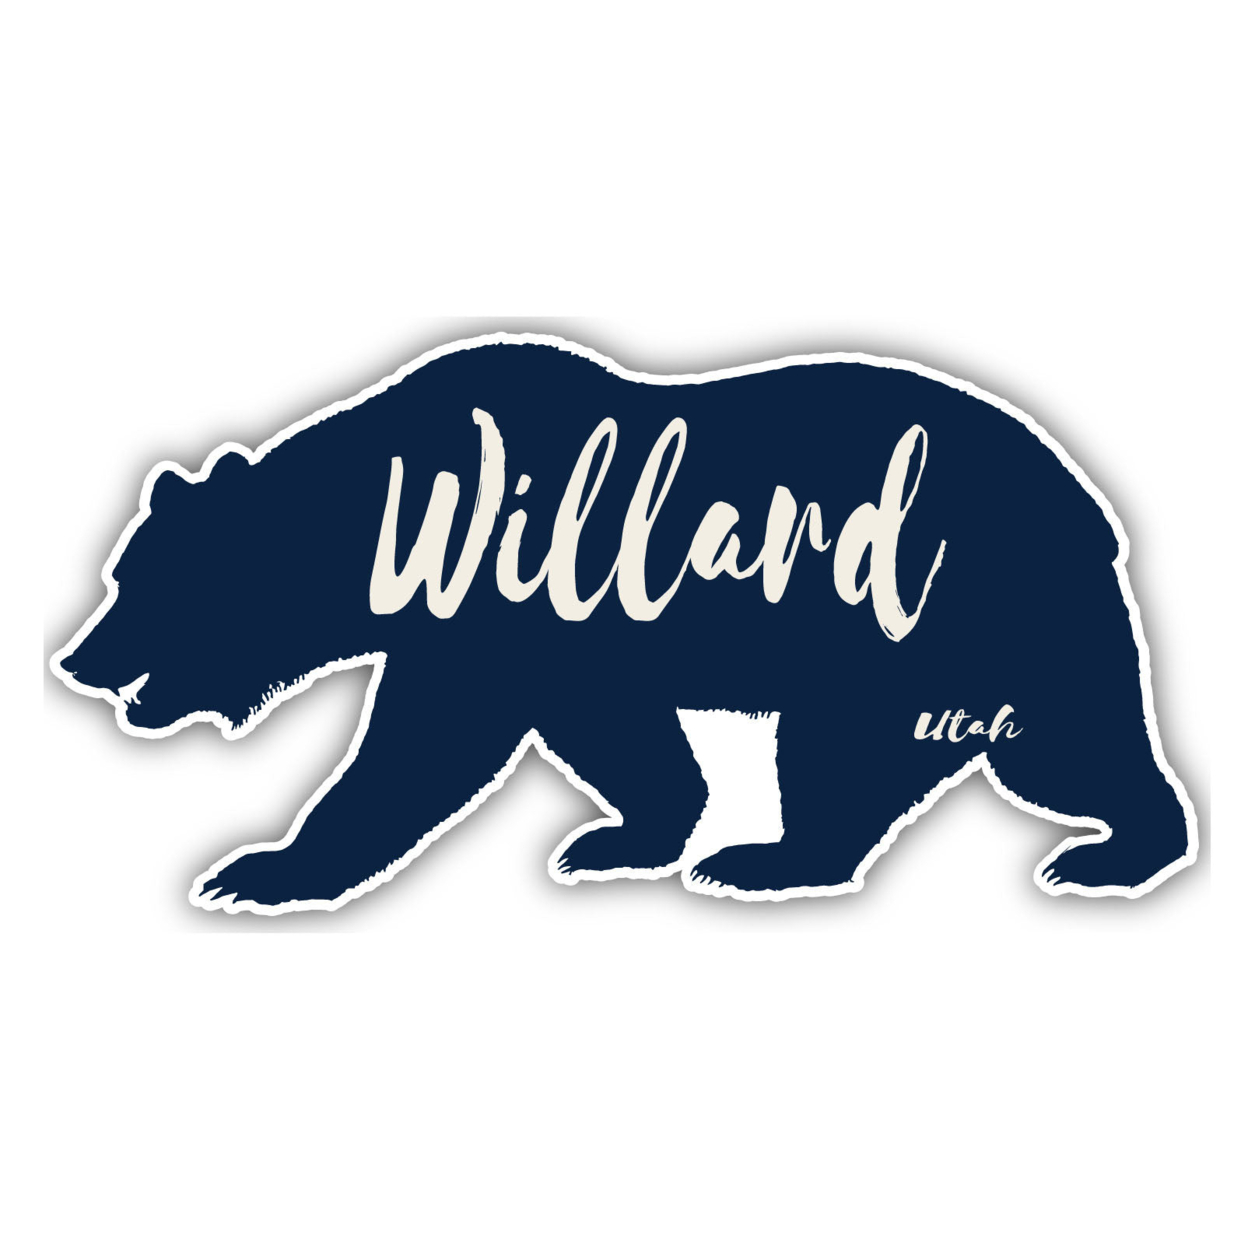 Willard Utah Souvenir Decorative Stickers (Choose Theme And Size) - Single Unit, 4-Inch, Bear